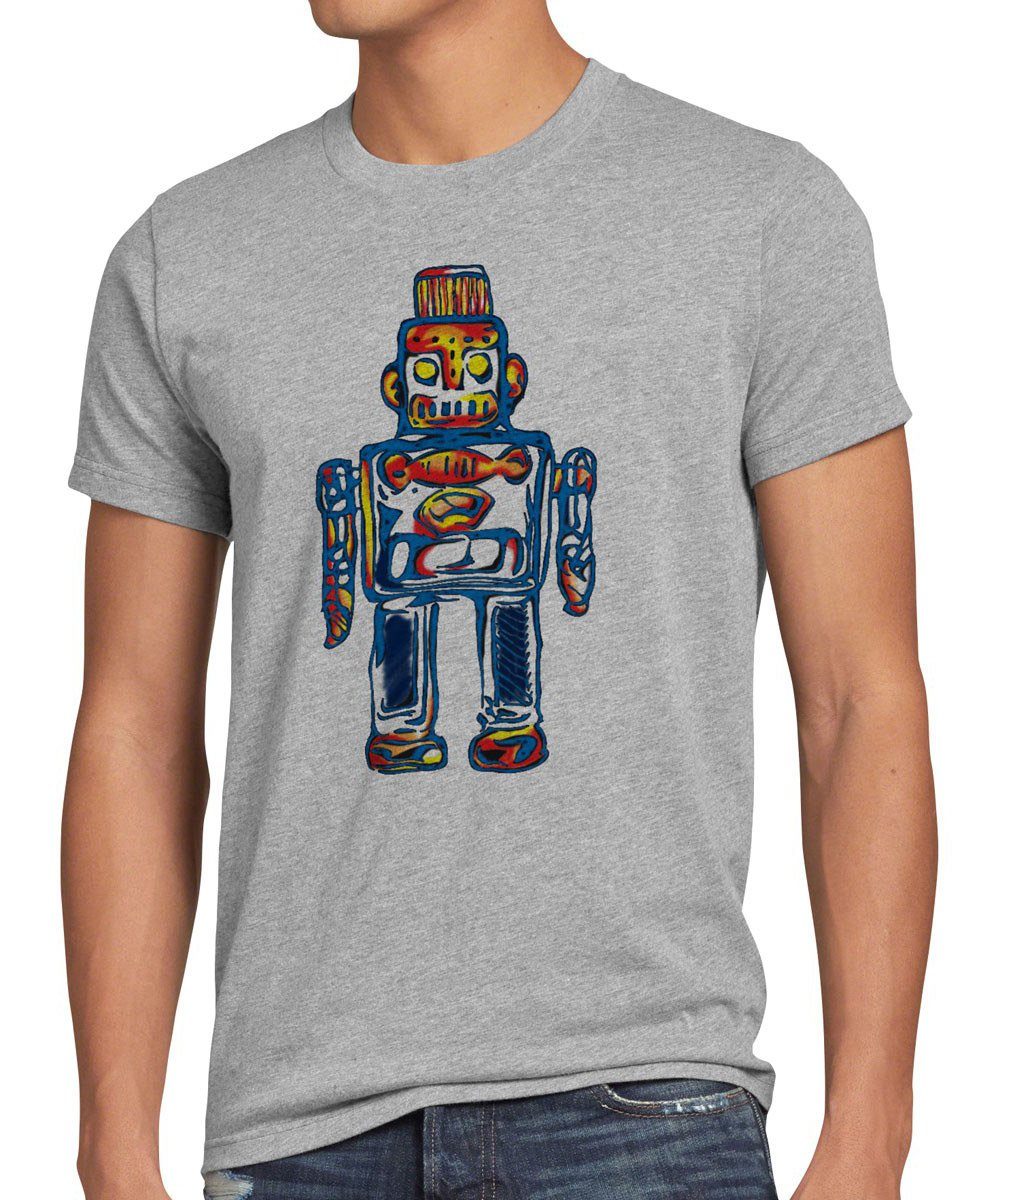 style3 Print-Shirt Herren T-Shirt Sheldon Toy Robot big bang cooper tbbt Roboter spielzeug Leonard grau meliert | T-Shirts